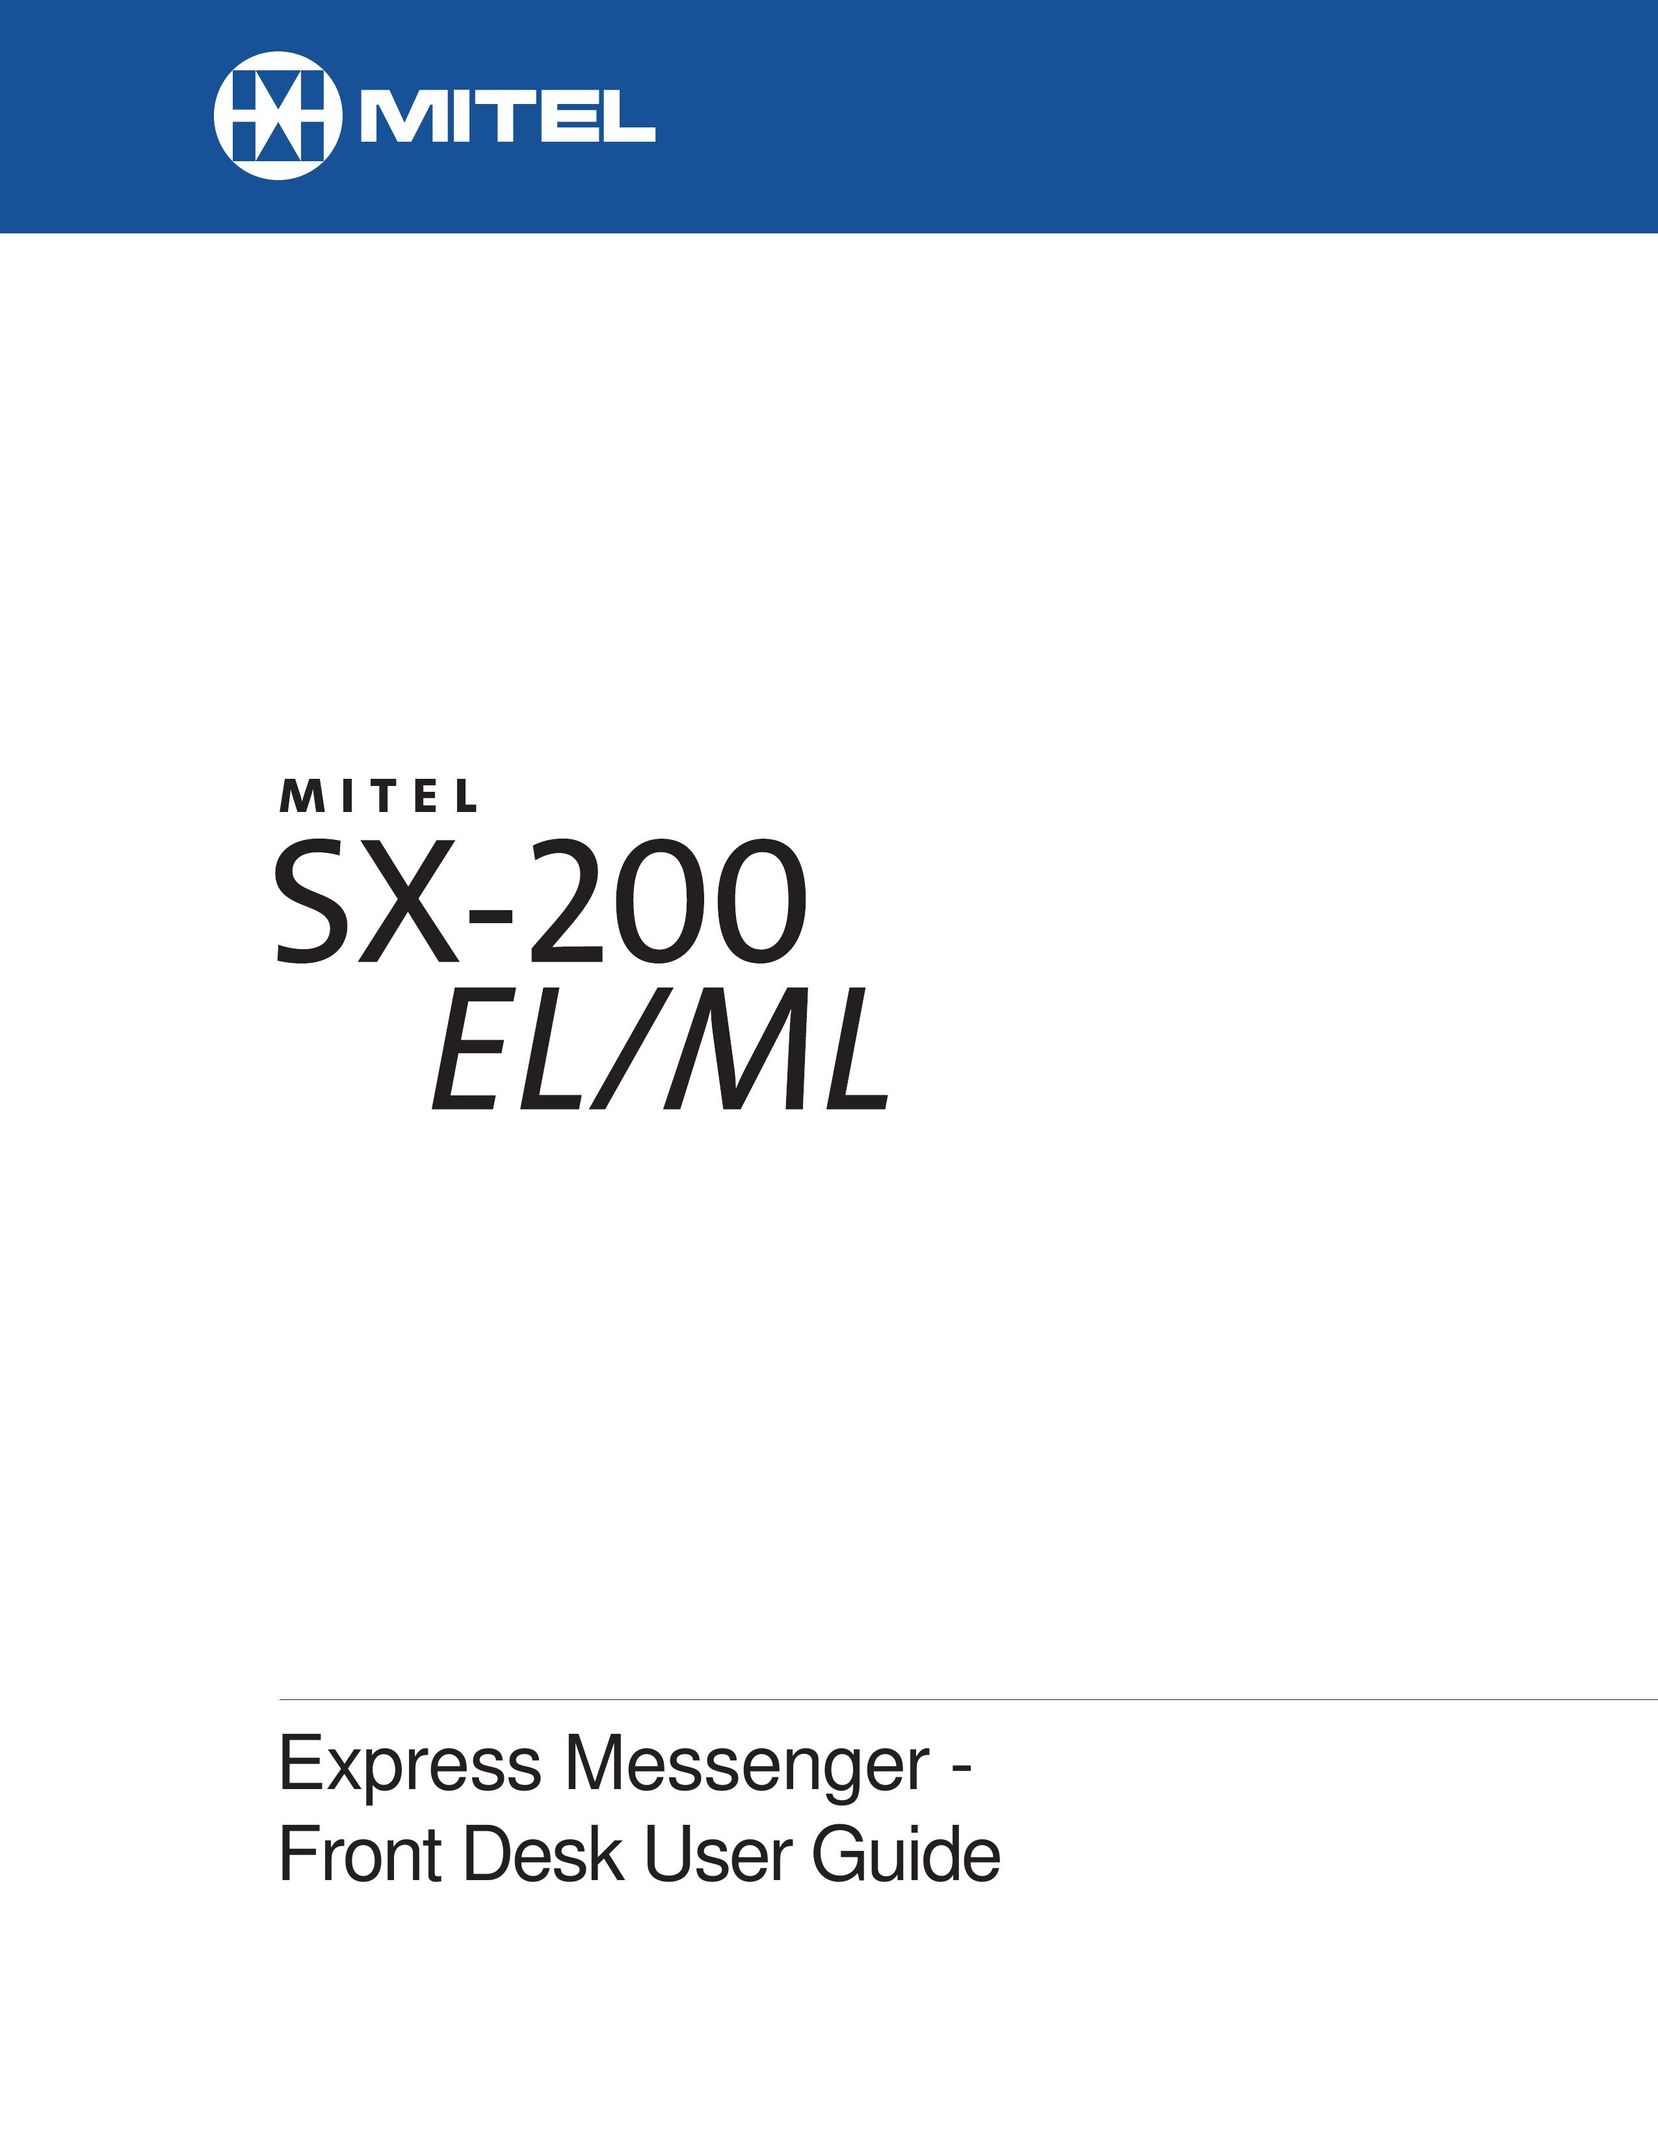 Mitel SX-200 EL Answering Machine User Manual